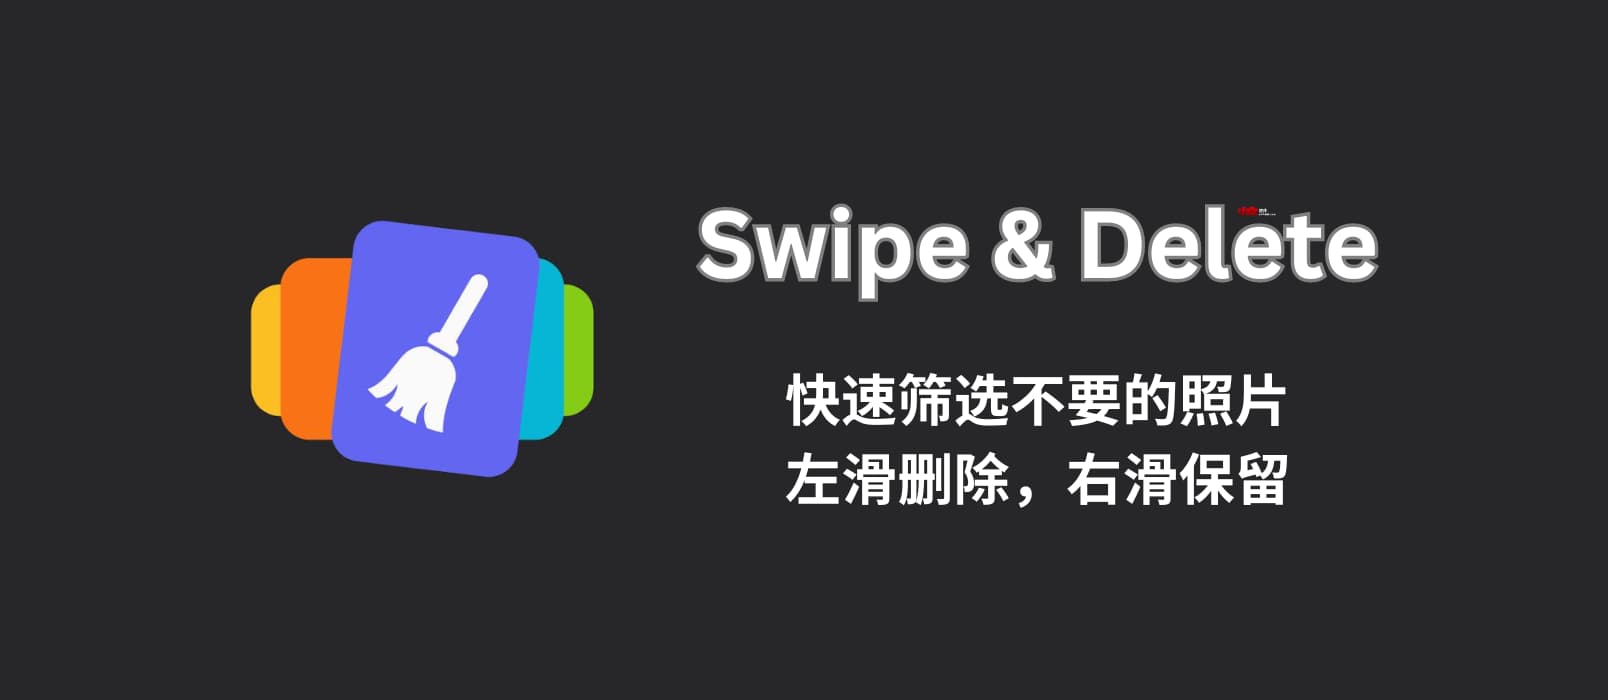 Swipe & Delete - 快速筛选不要的照片：左滑删除，右滑保留[iOS/Android] 1